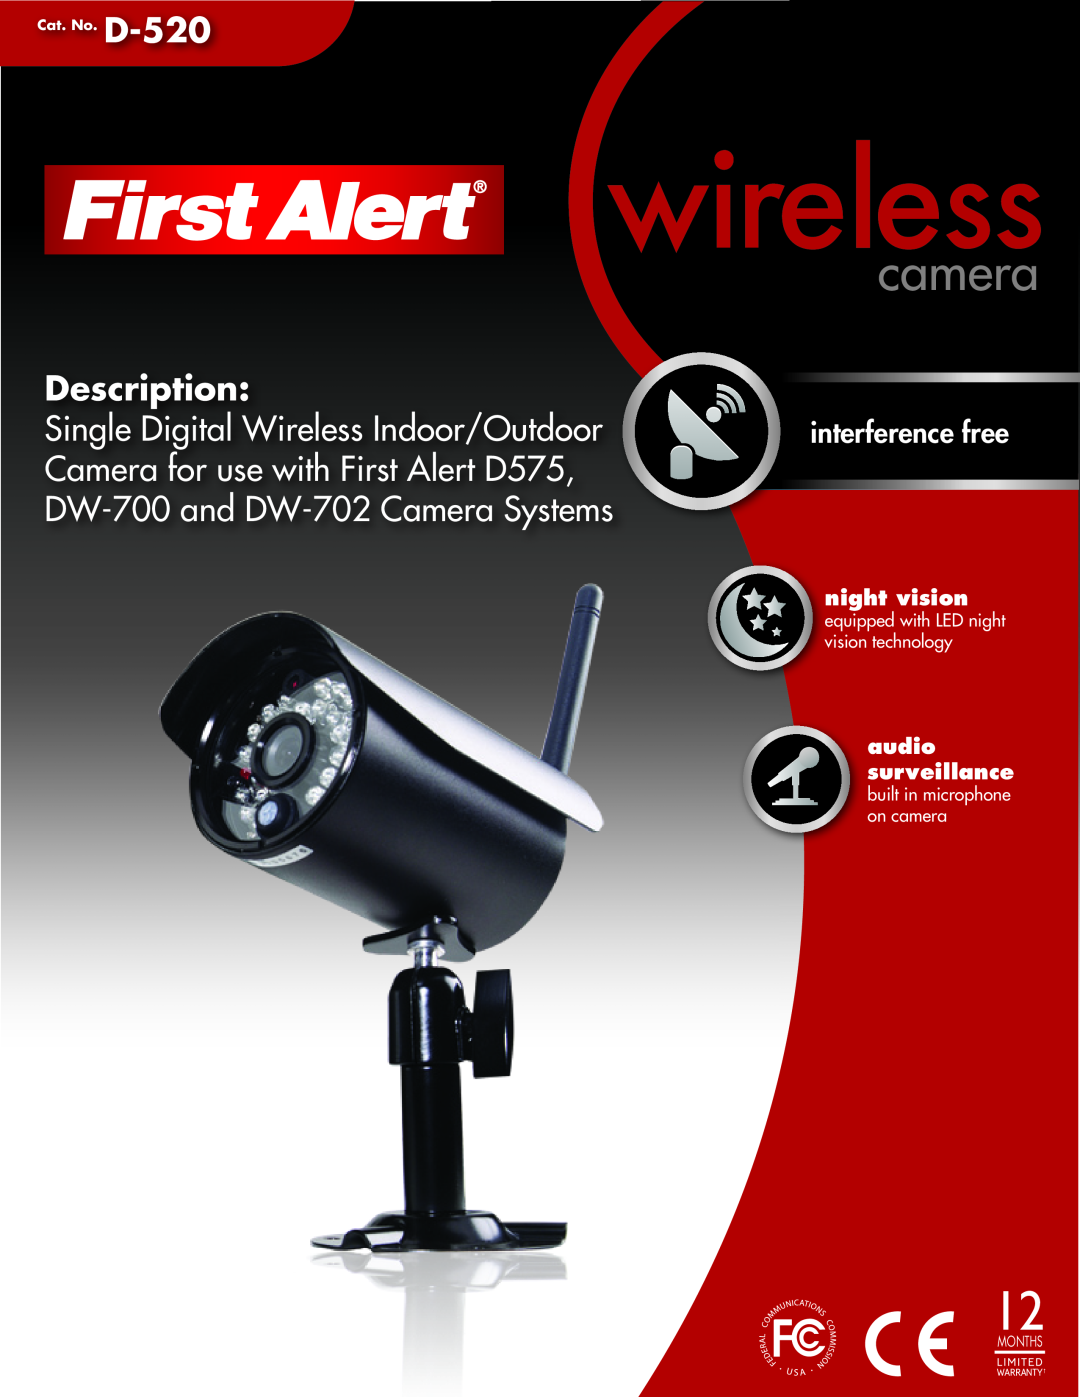 First Alert manual camera, Description, interference free, night vision, audio surveillance, Cat. No. D-520, Months 